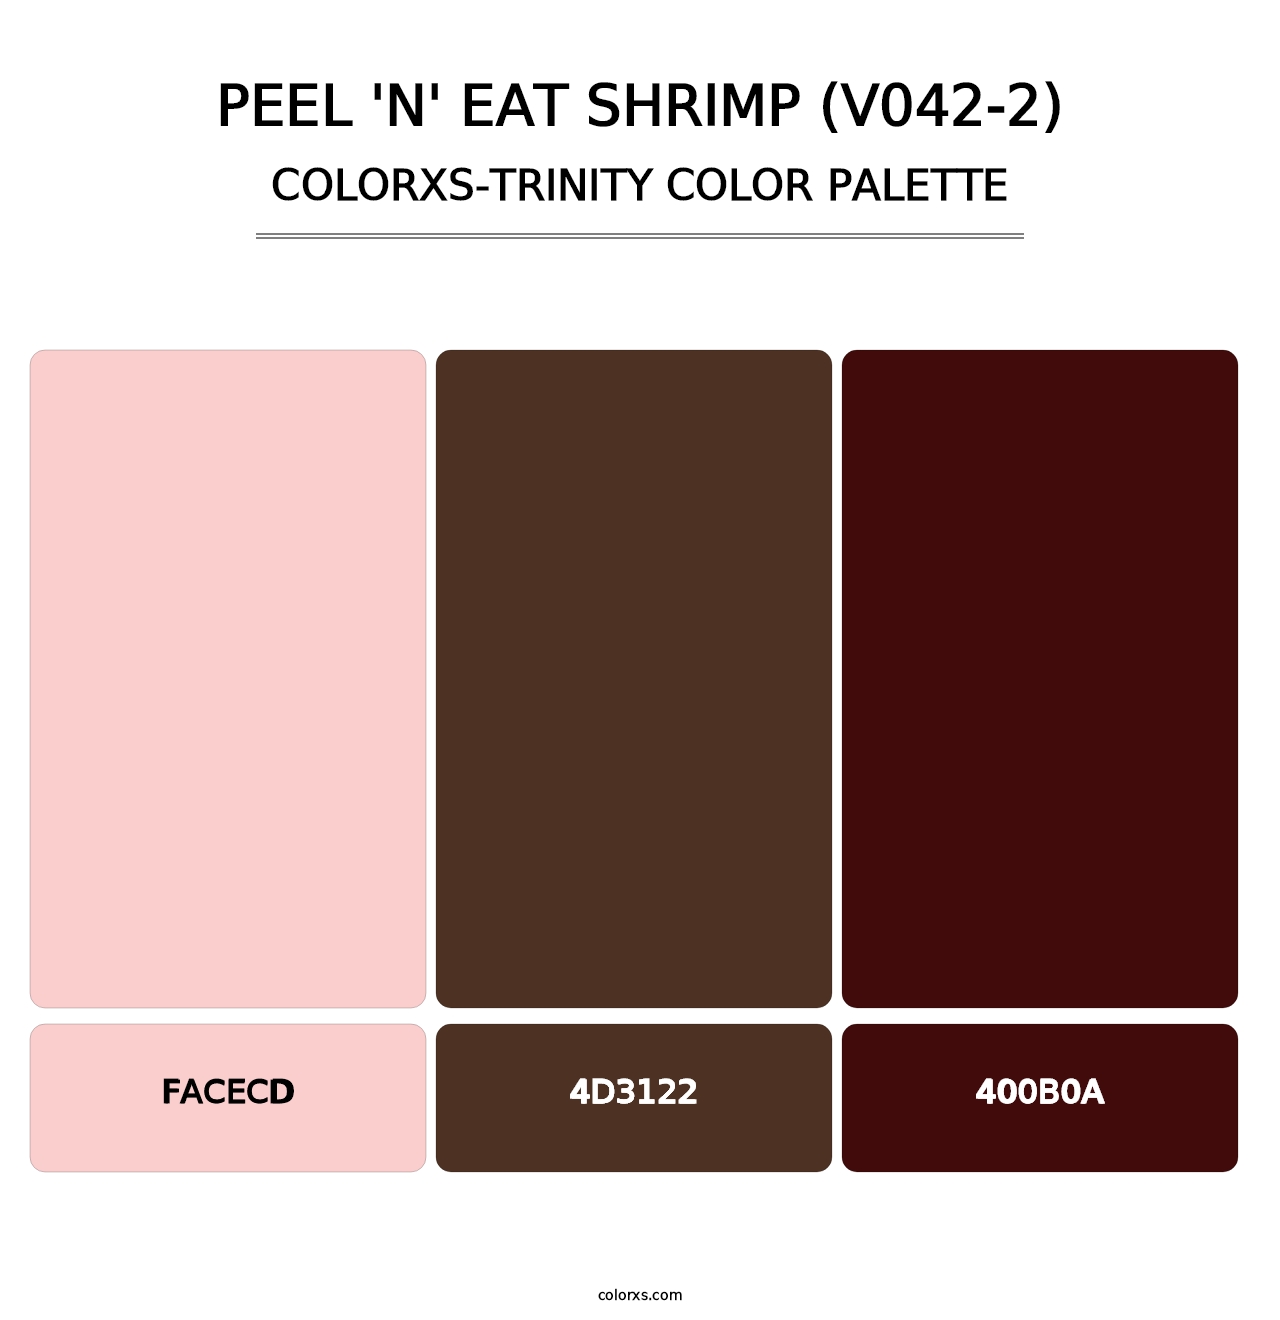 Peel 'n' Eat Shrimp (V042-2) - Colorxs Trinity Palette